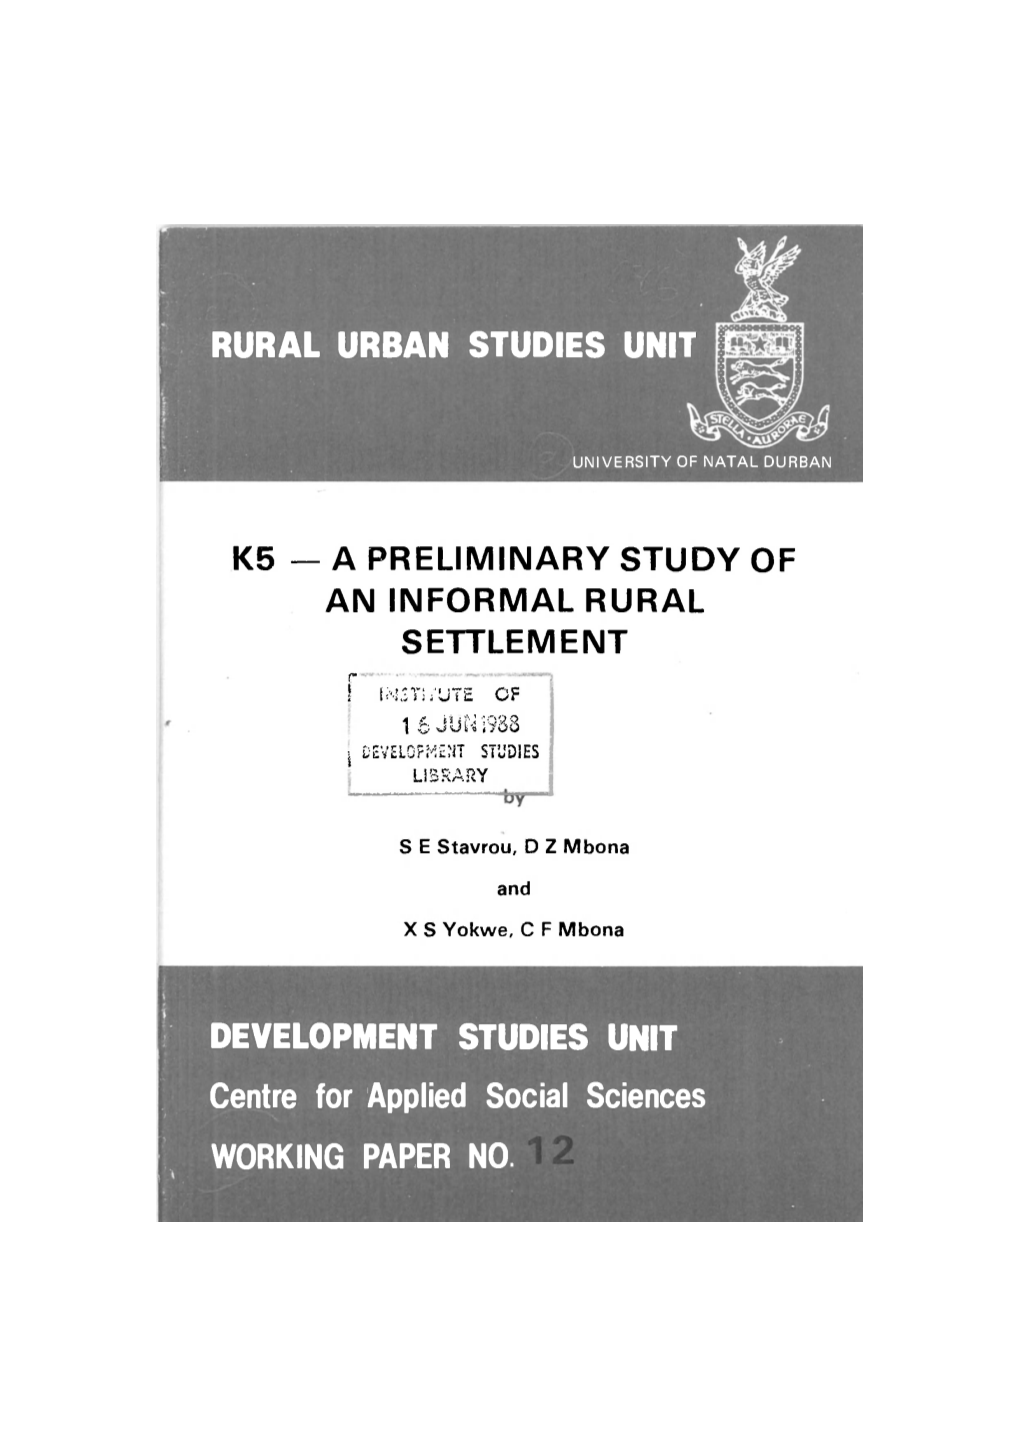 Rural Urban Studies Unit Development Studies Unit